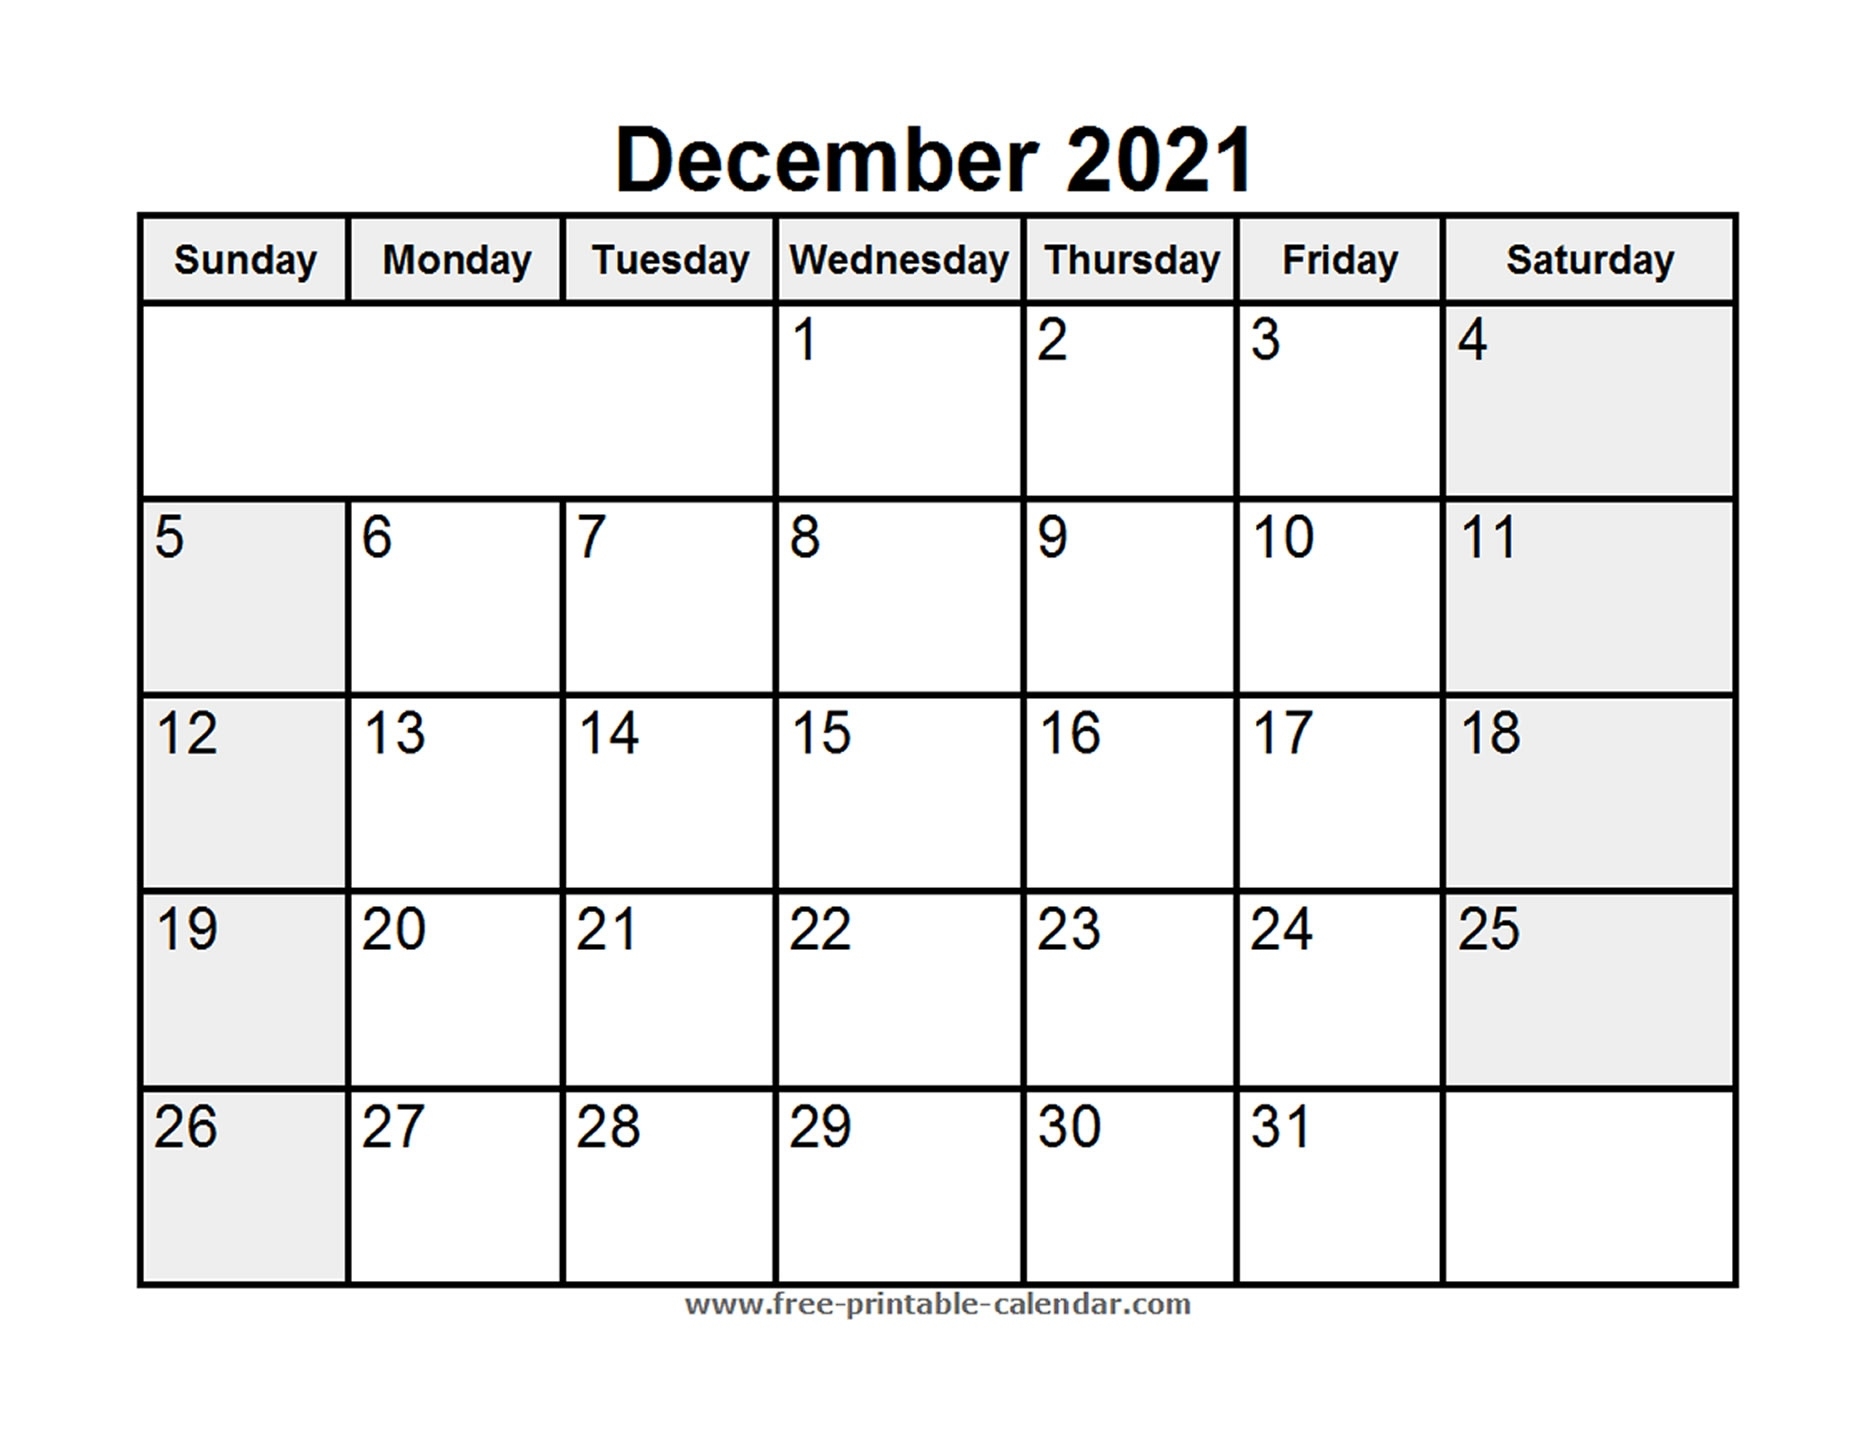 Printable December 2021 Calendar - Free-Printable-Calendar December 2021 Calendar Holidays